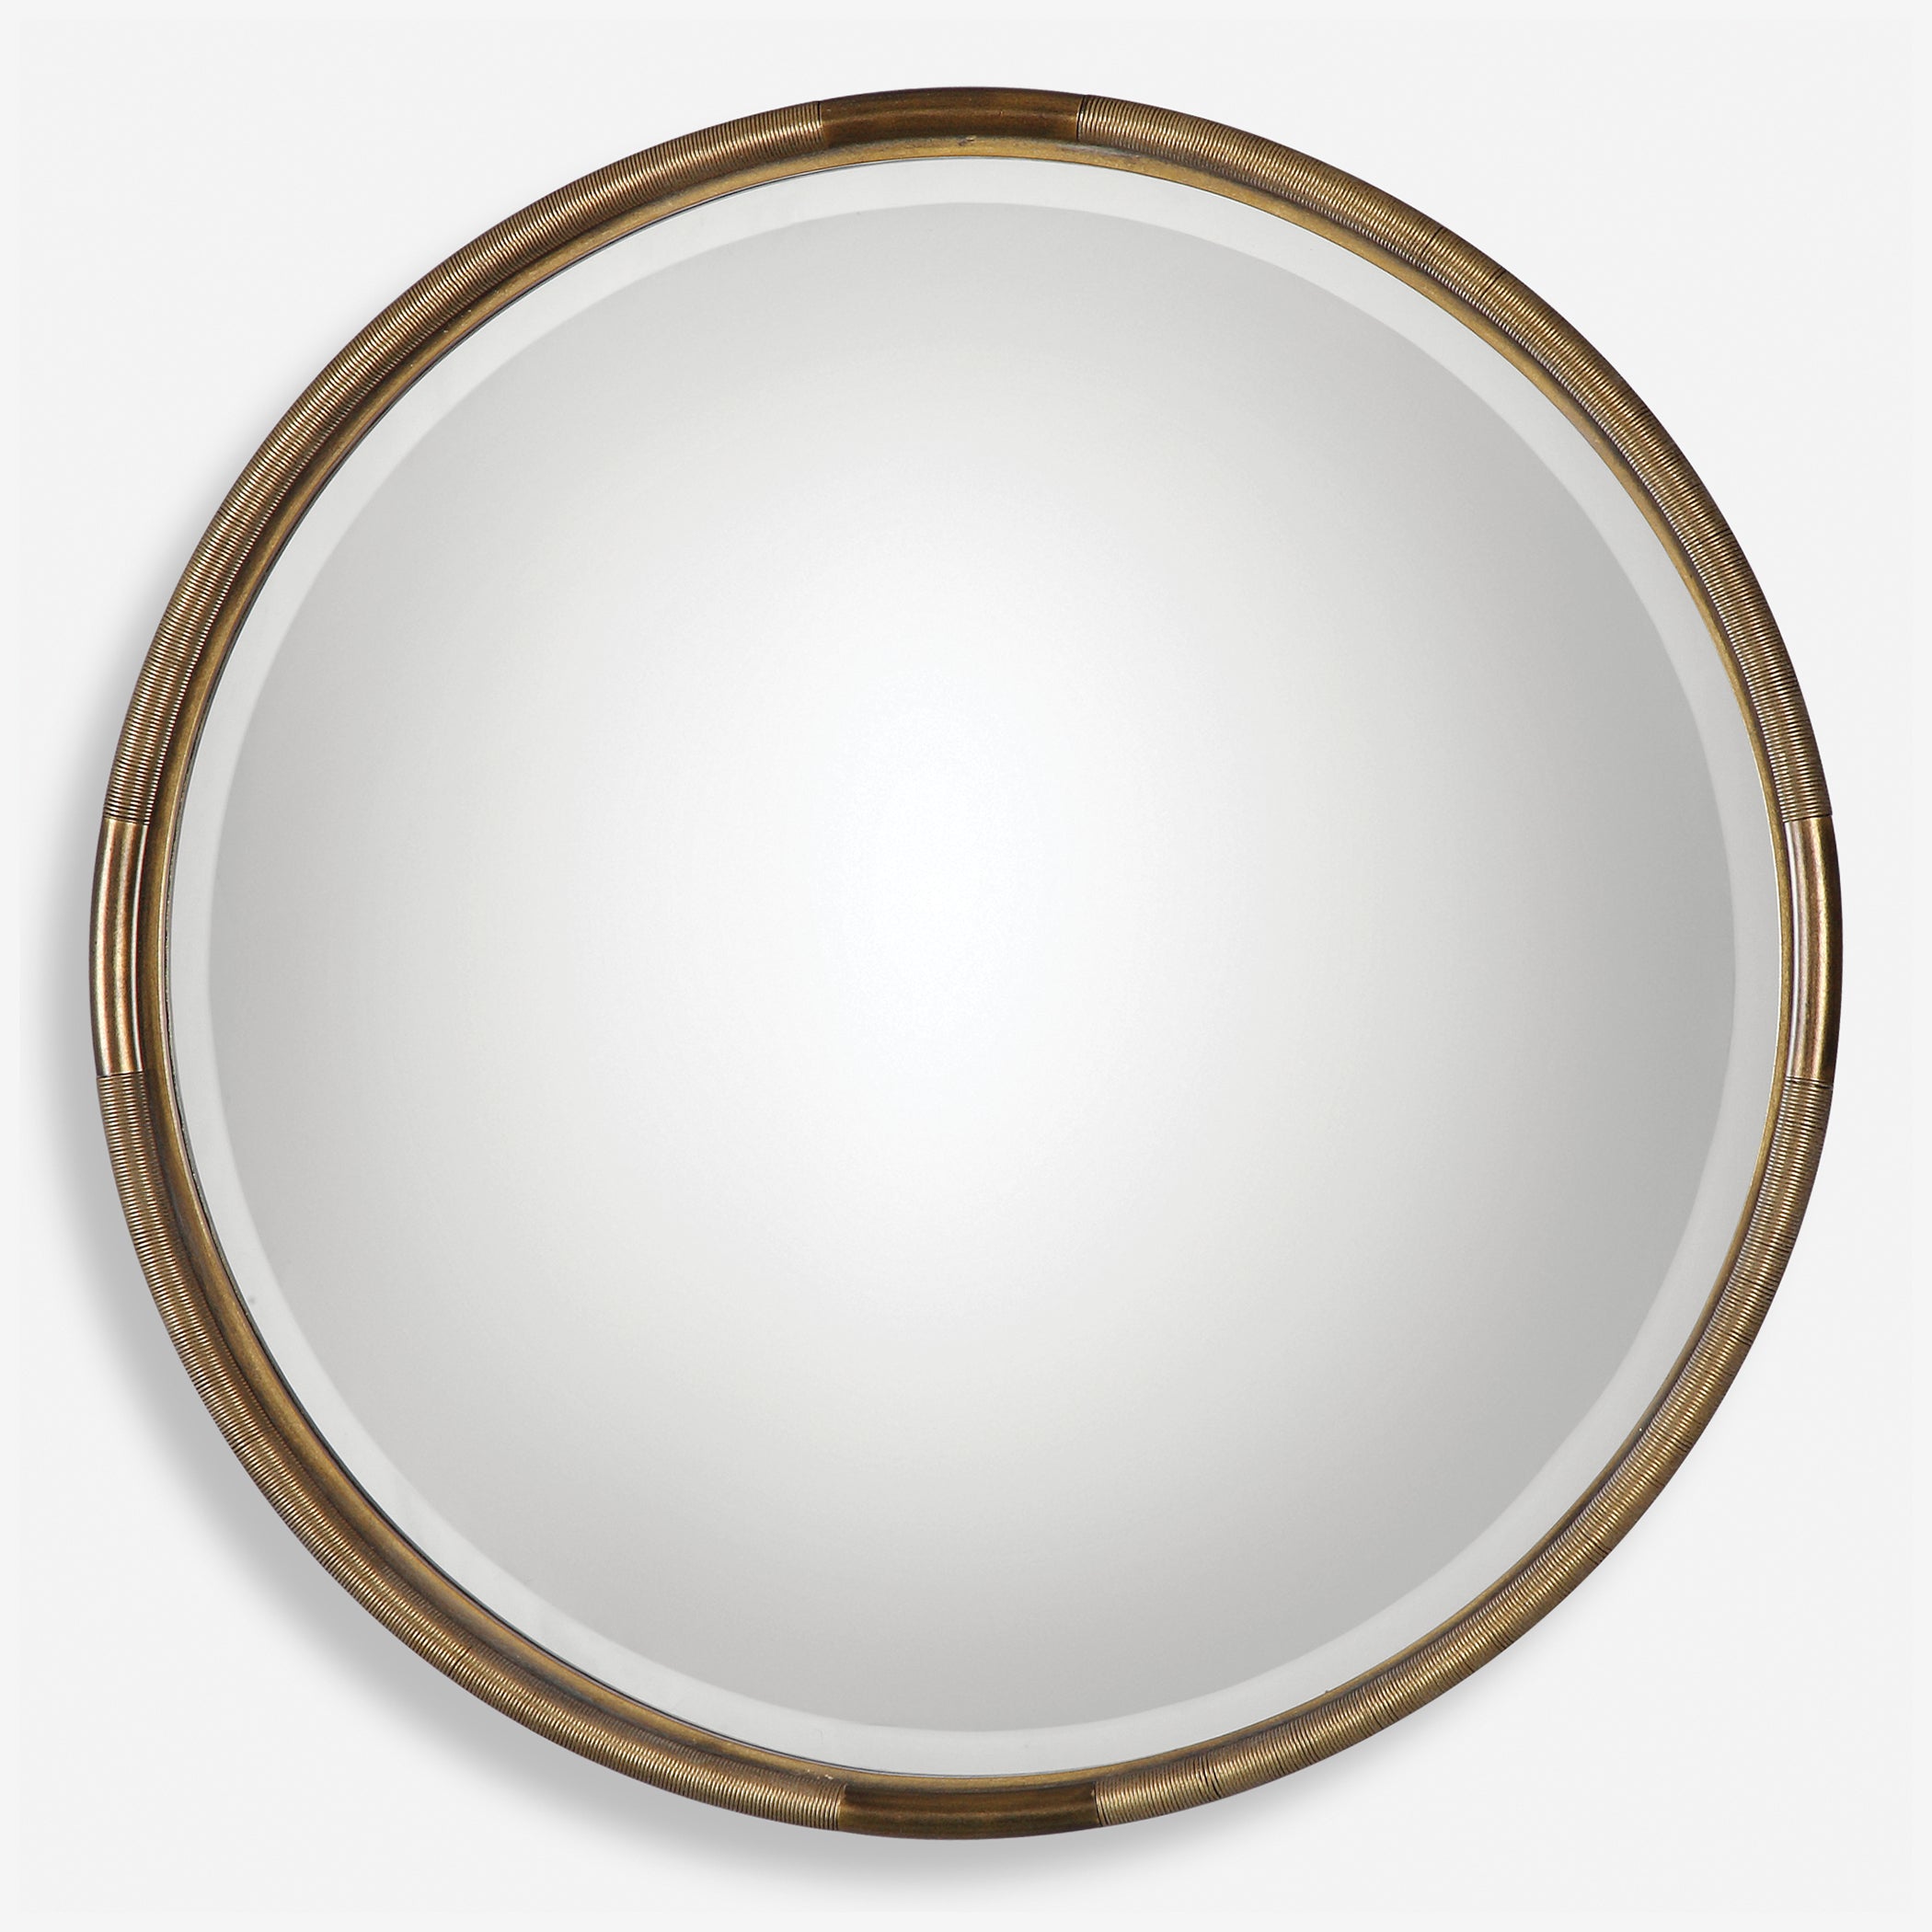 Uttermost Finnick Iron Coil Round Mirror Iron Coil Round Mirror Uttermost   